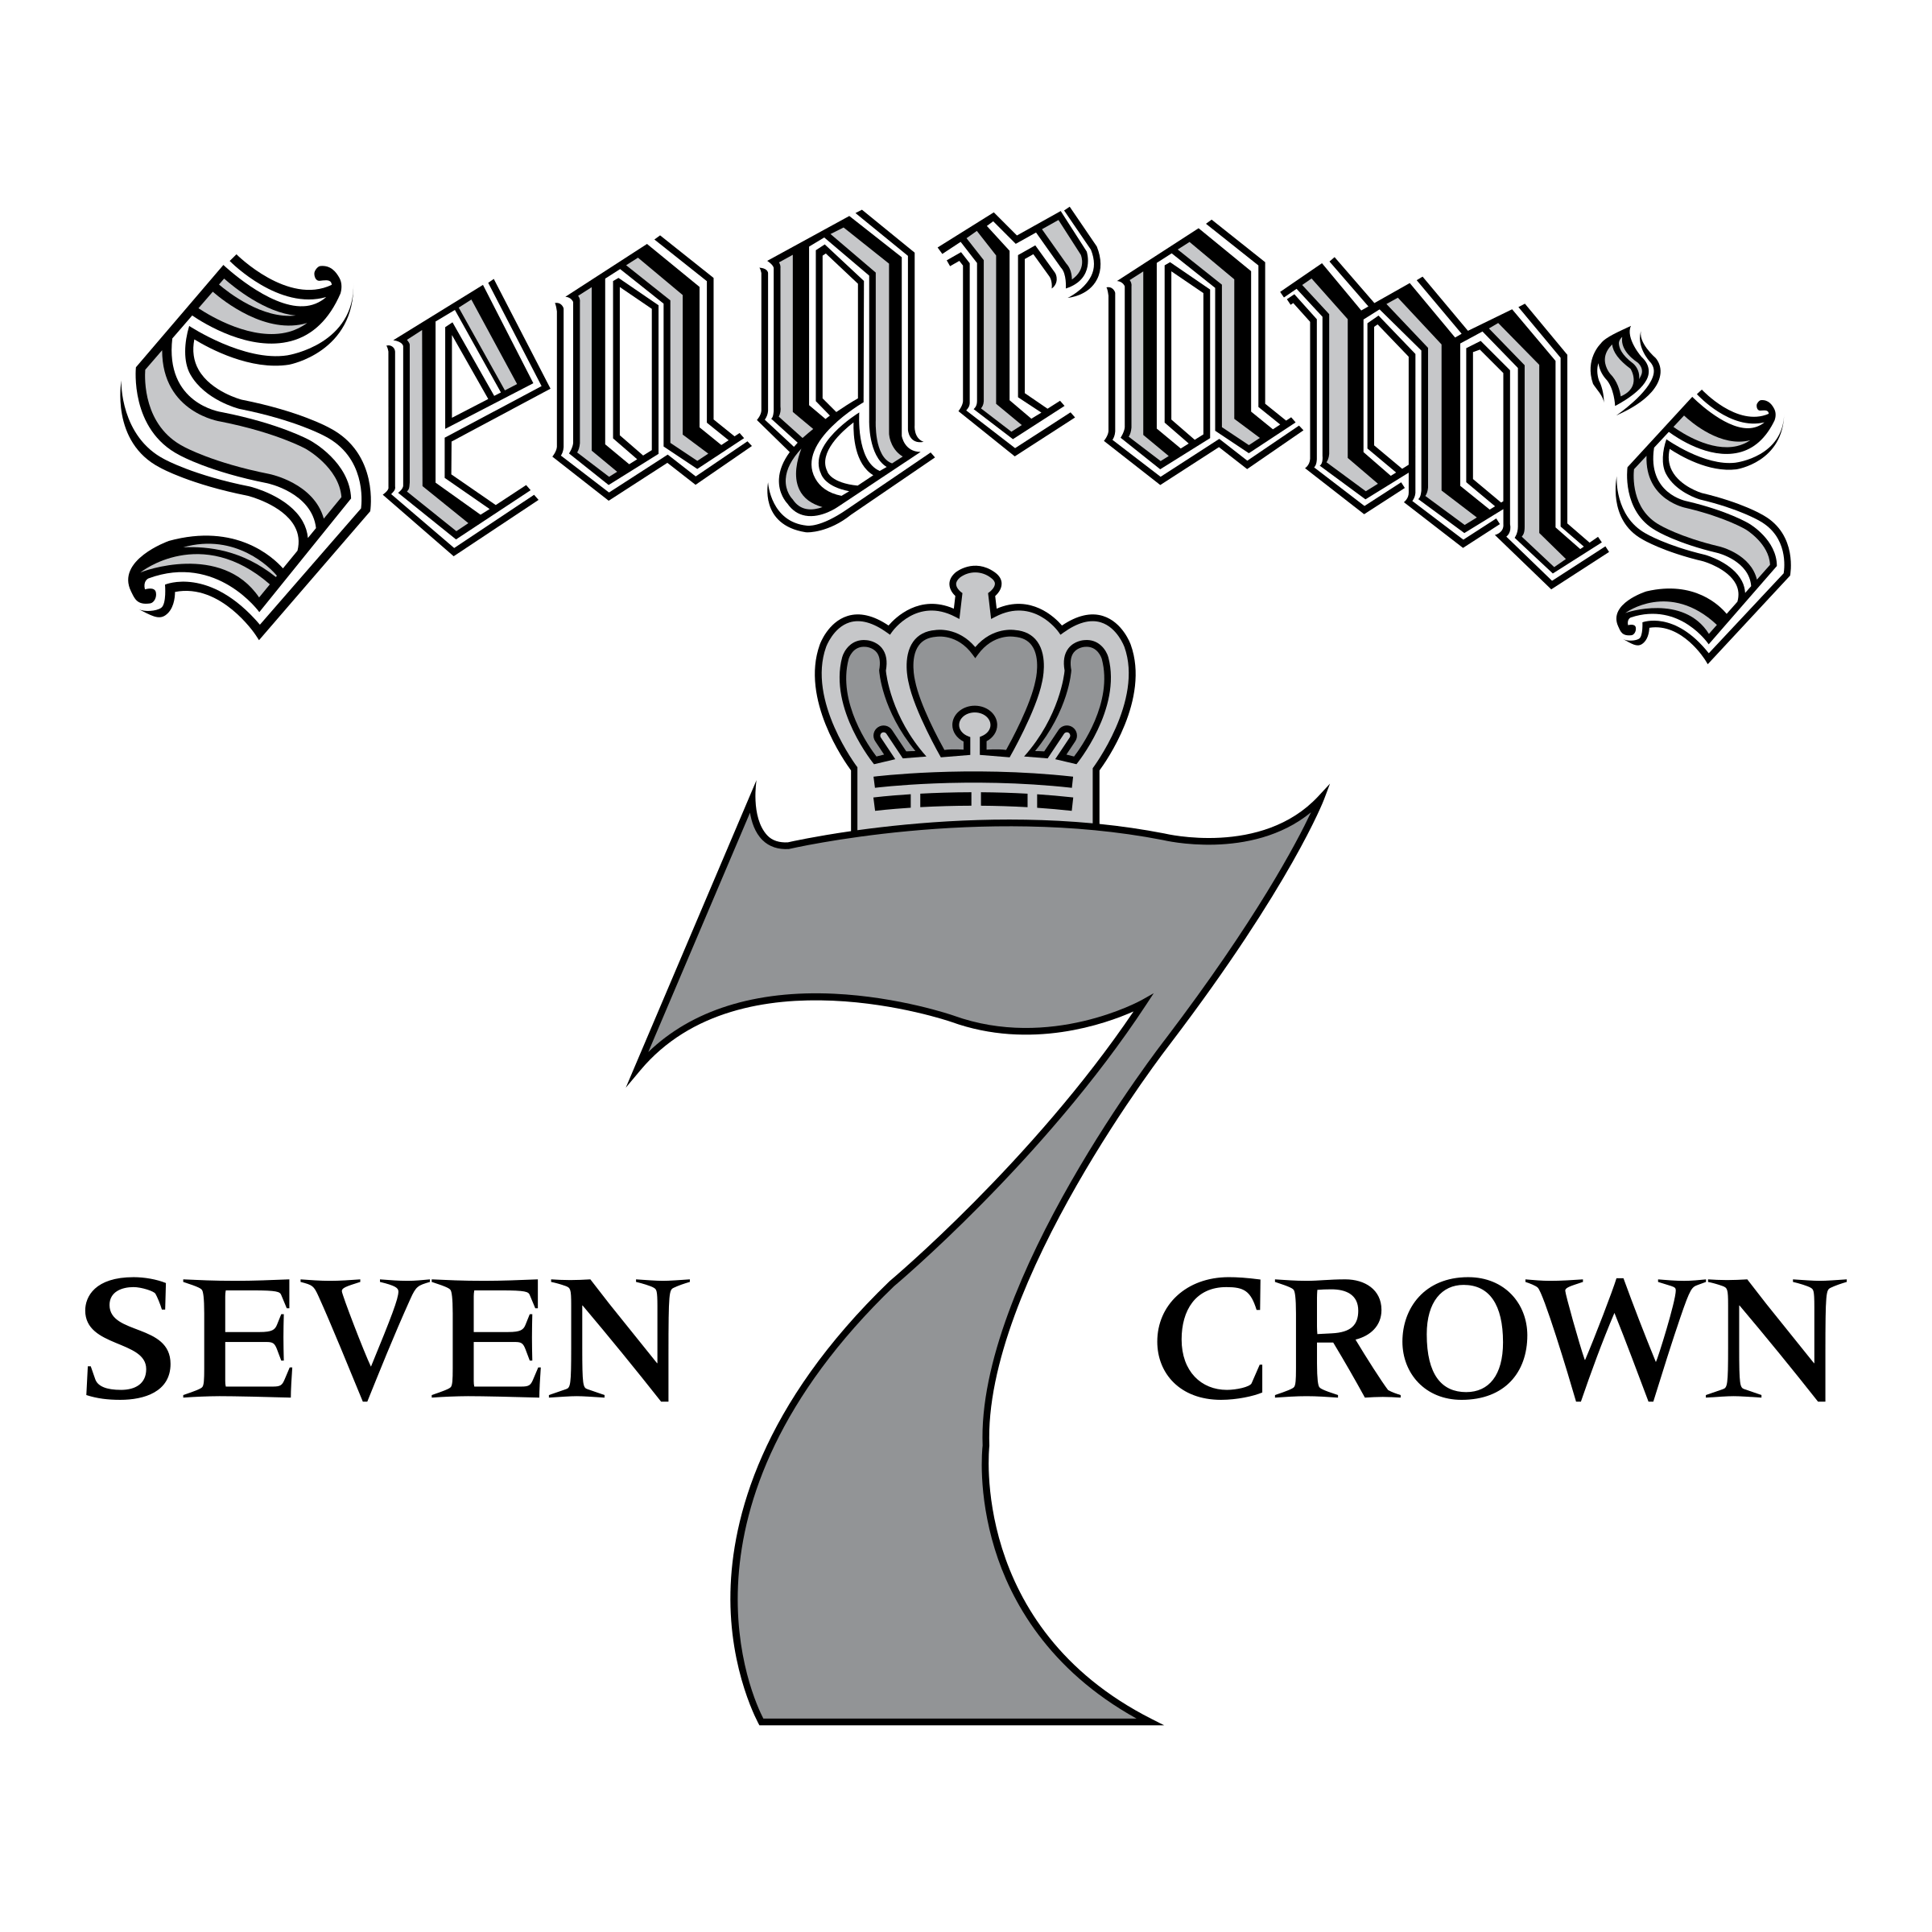 Seagram's Logo - Seagram's Seven Crown Logo PNG Transparent & SVG Vector - Freebie Supply